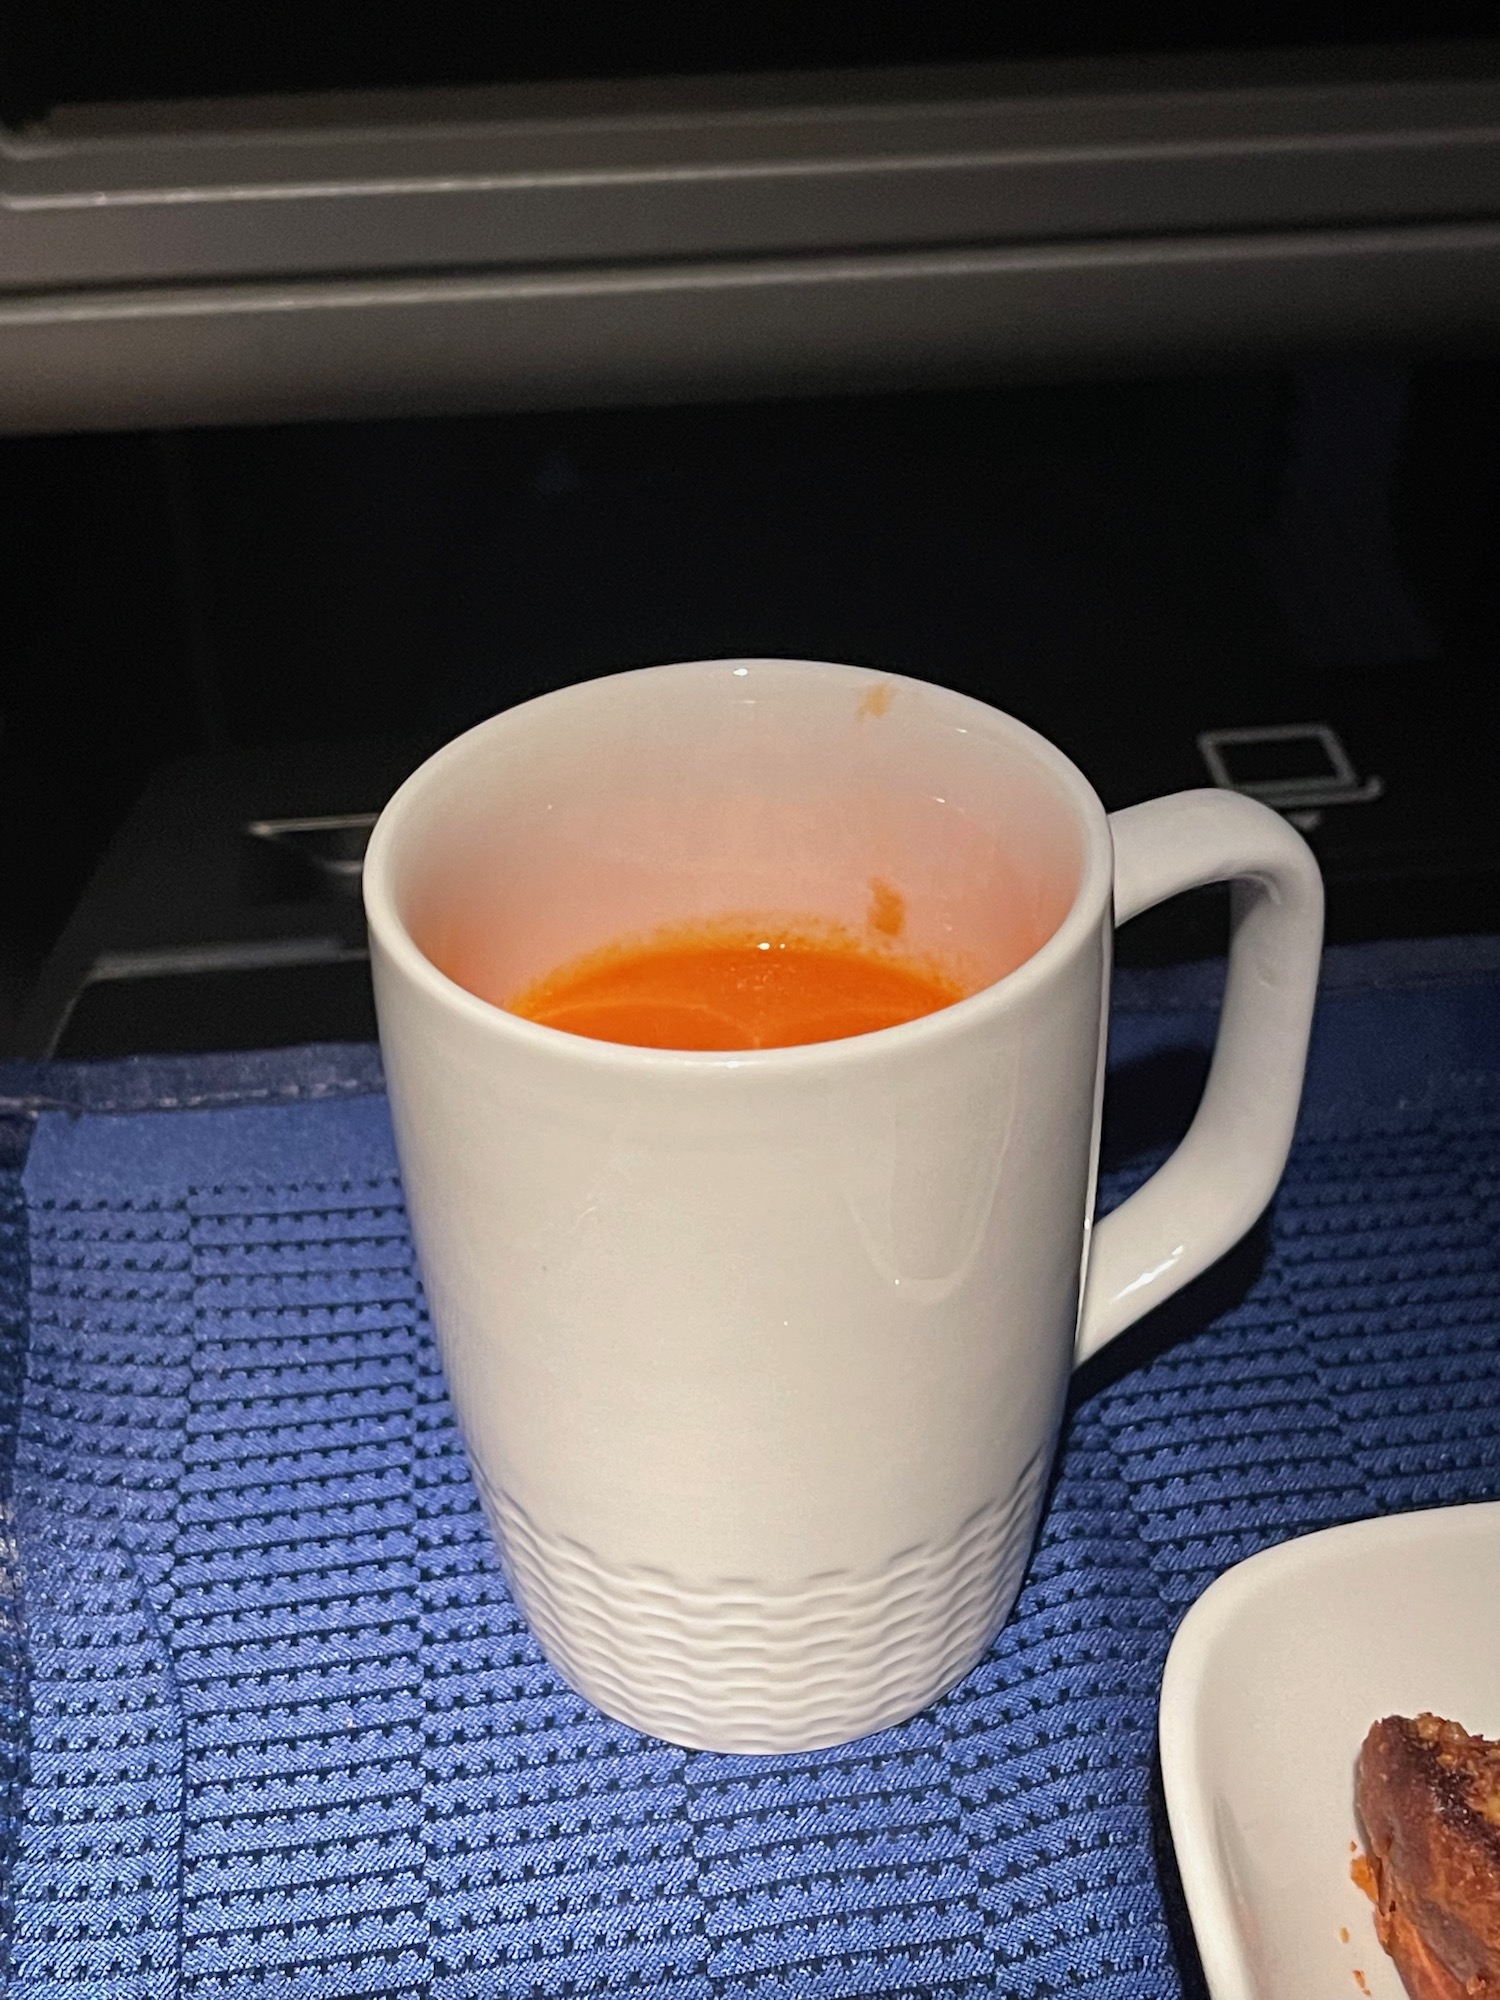 a white mug with orange liquid in it